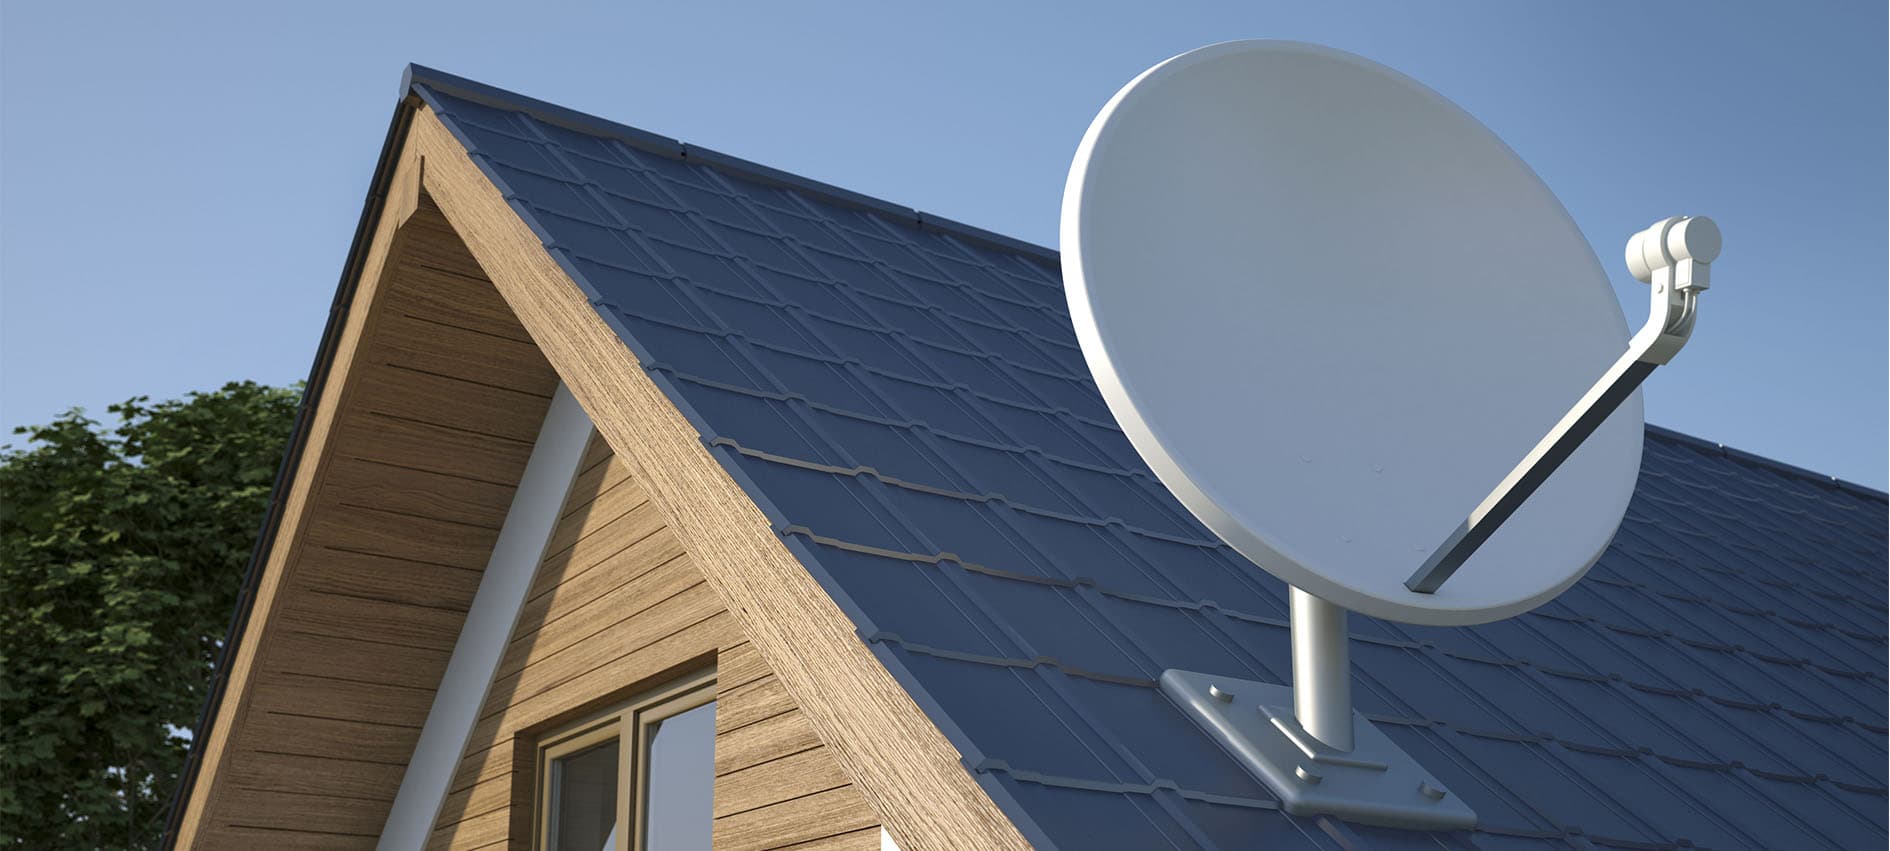 How to Choose an Outdoor TV Antenna